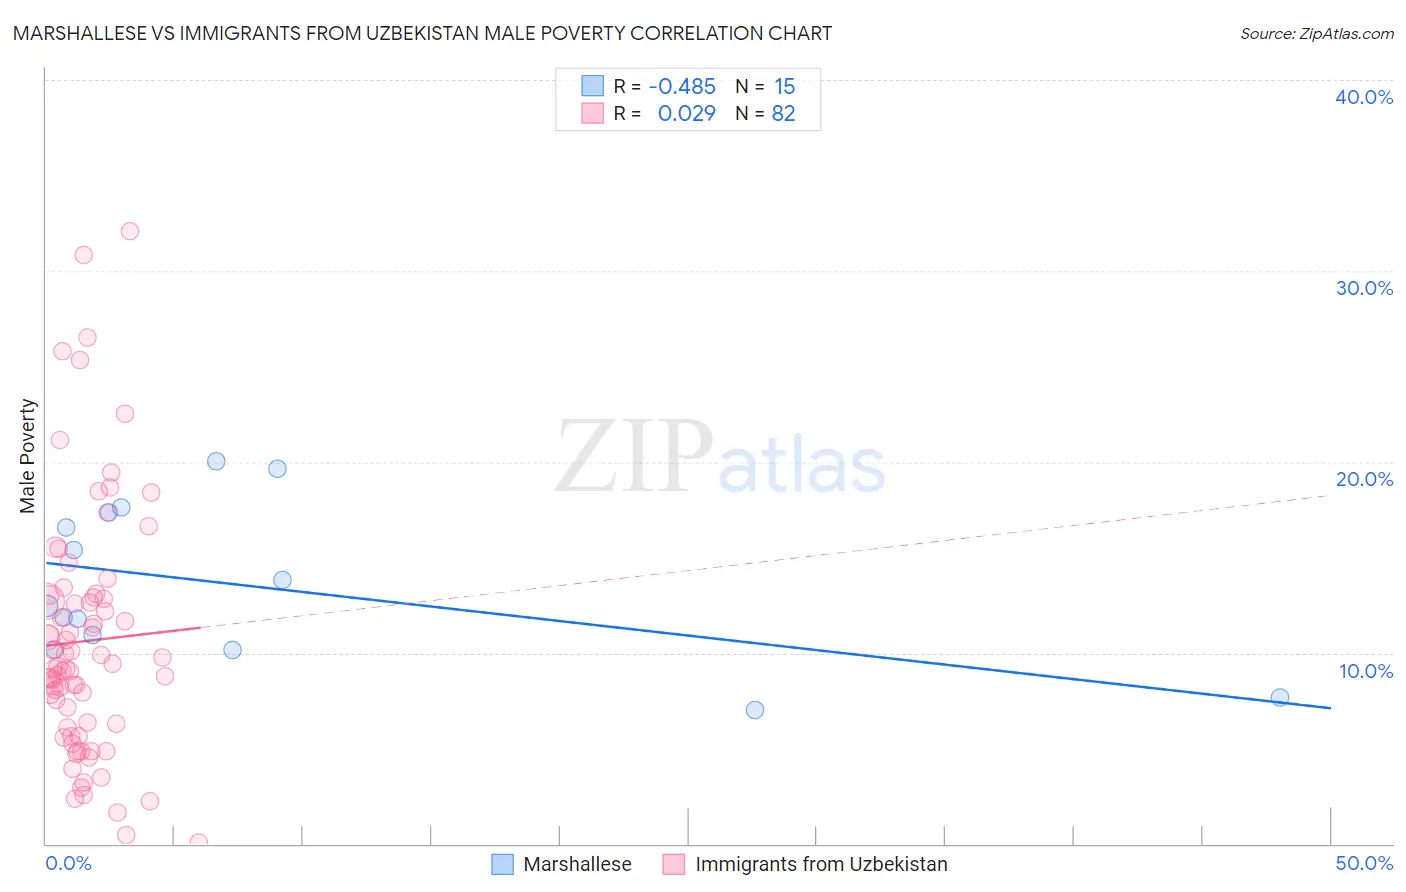 Marshallese vs Immigrants from Uzbekistan Male Poverty